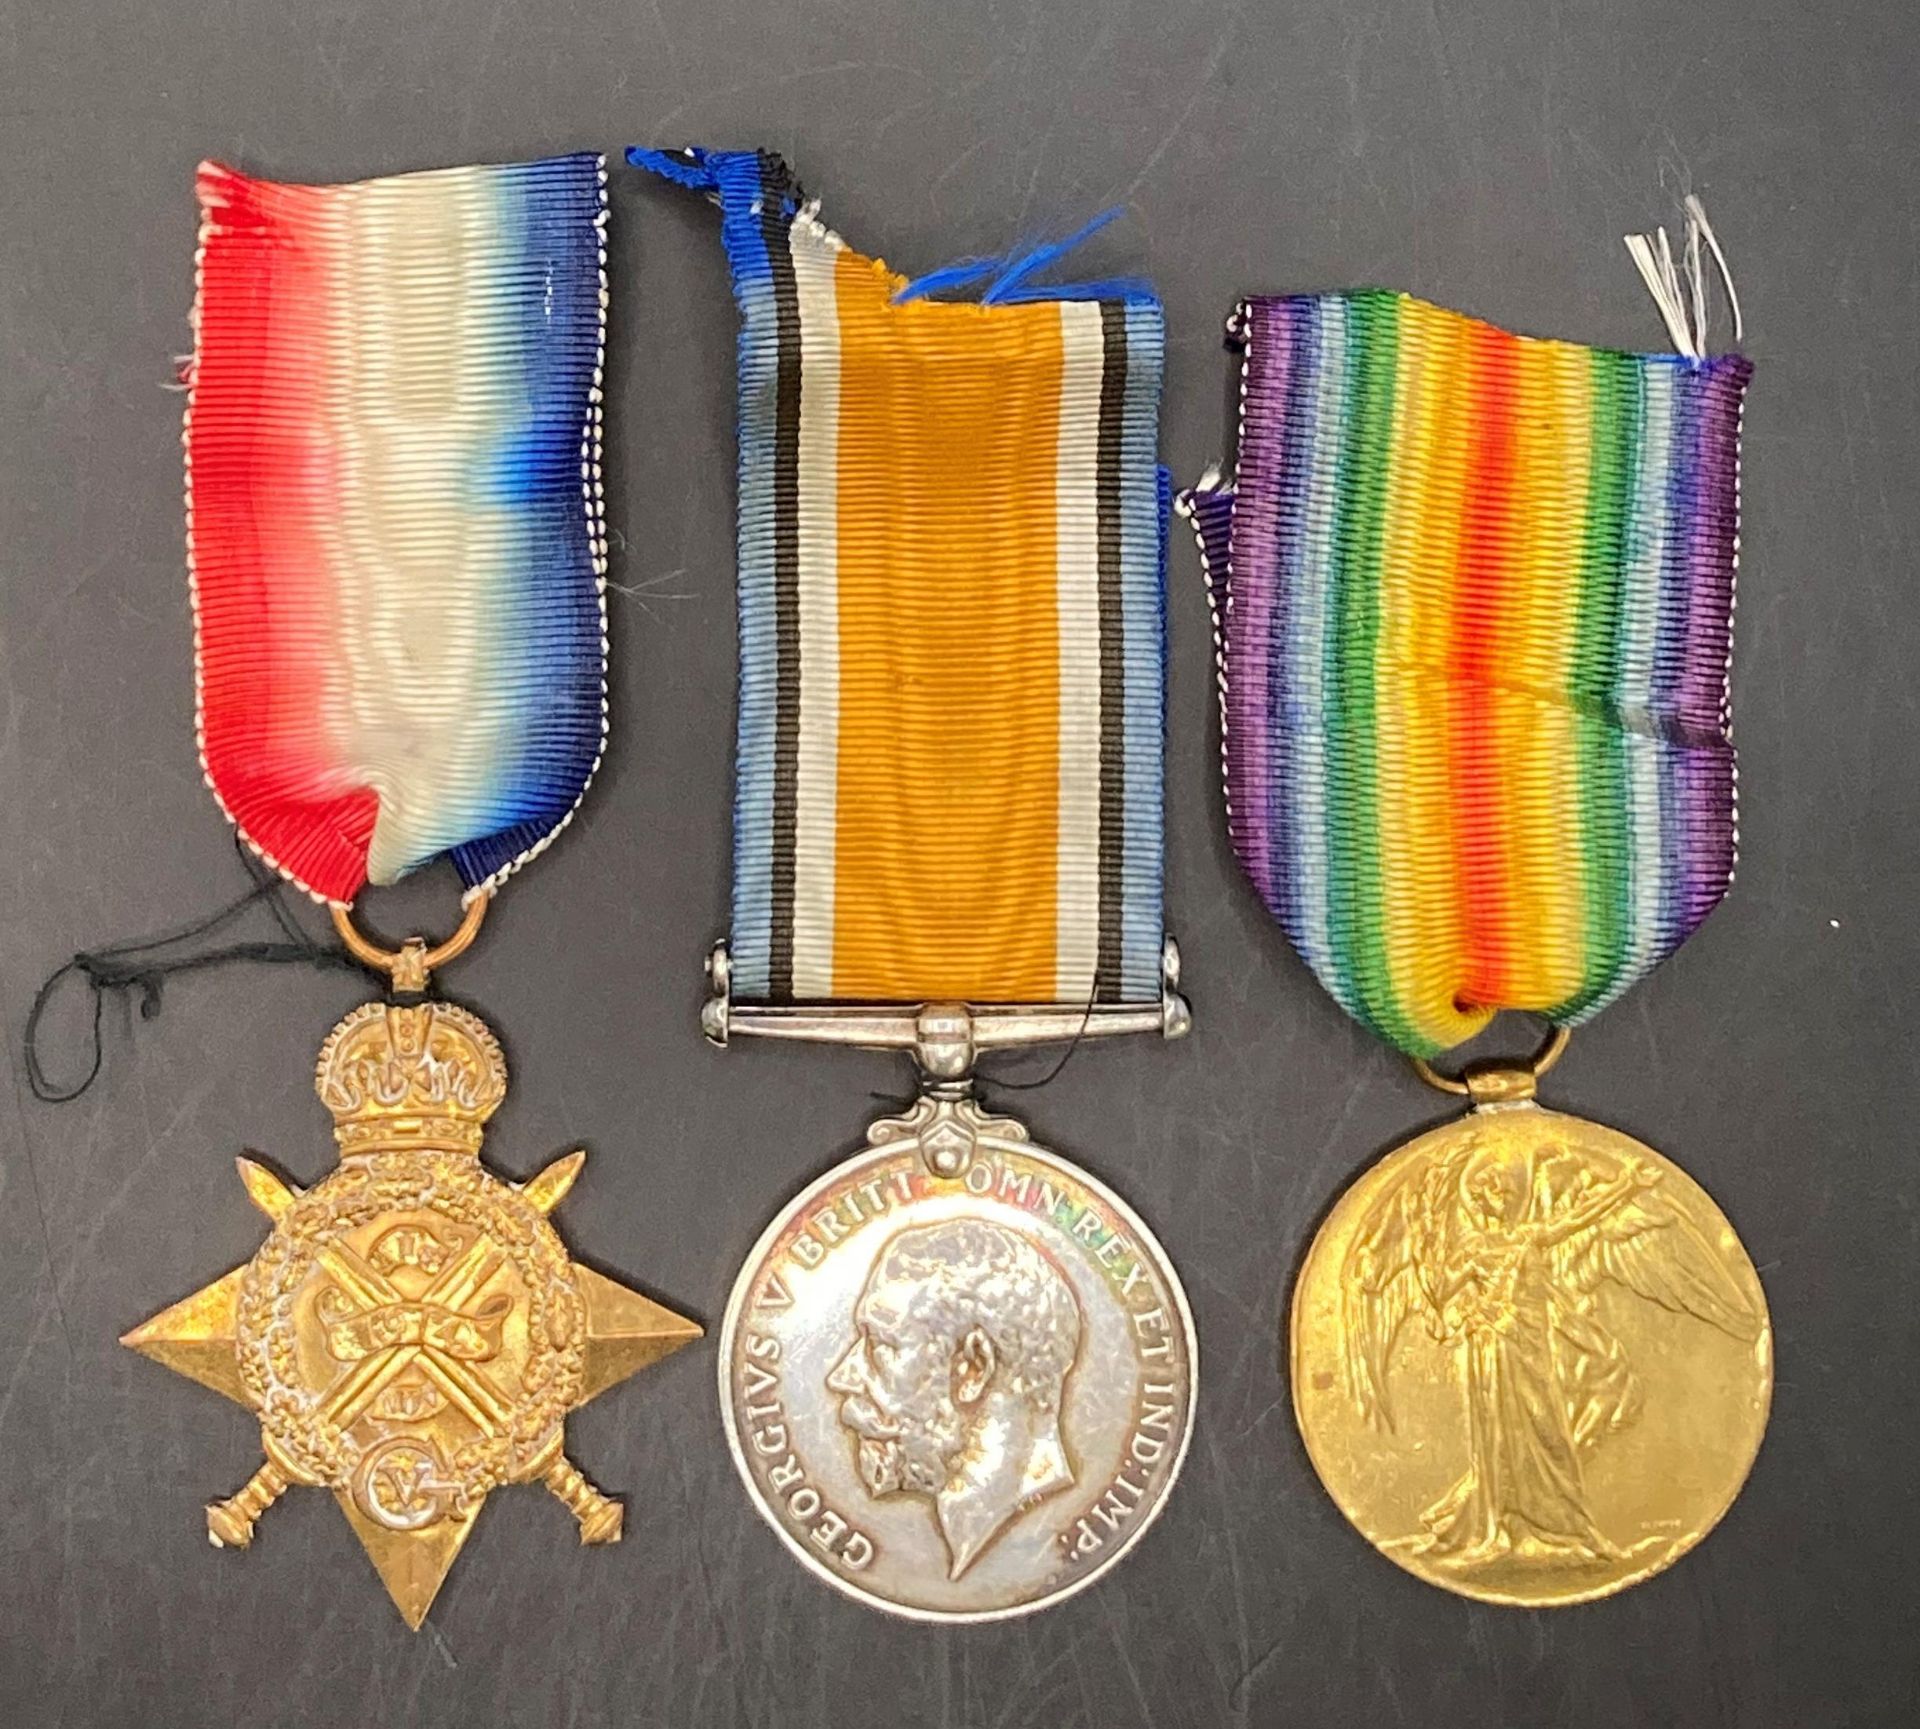 Three First World War Medals - 1914 Star,